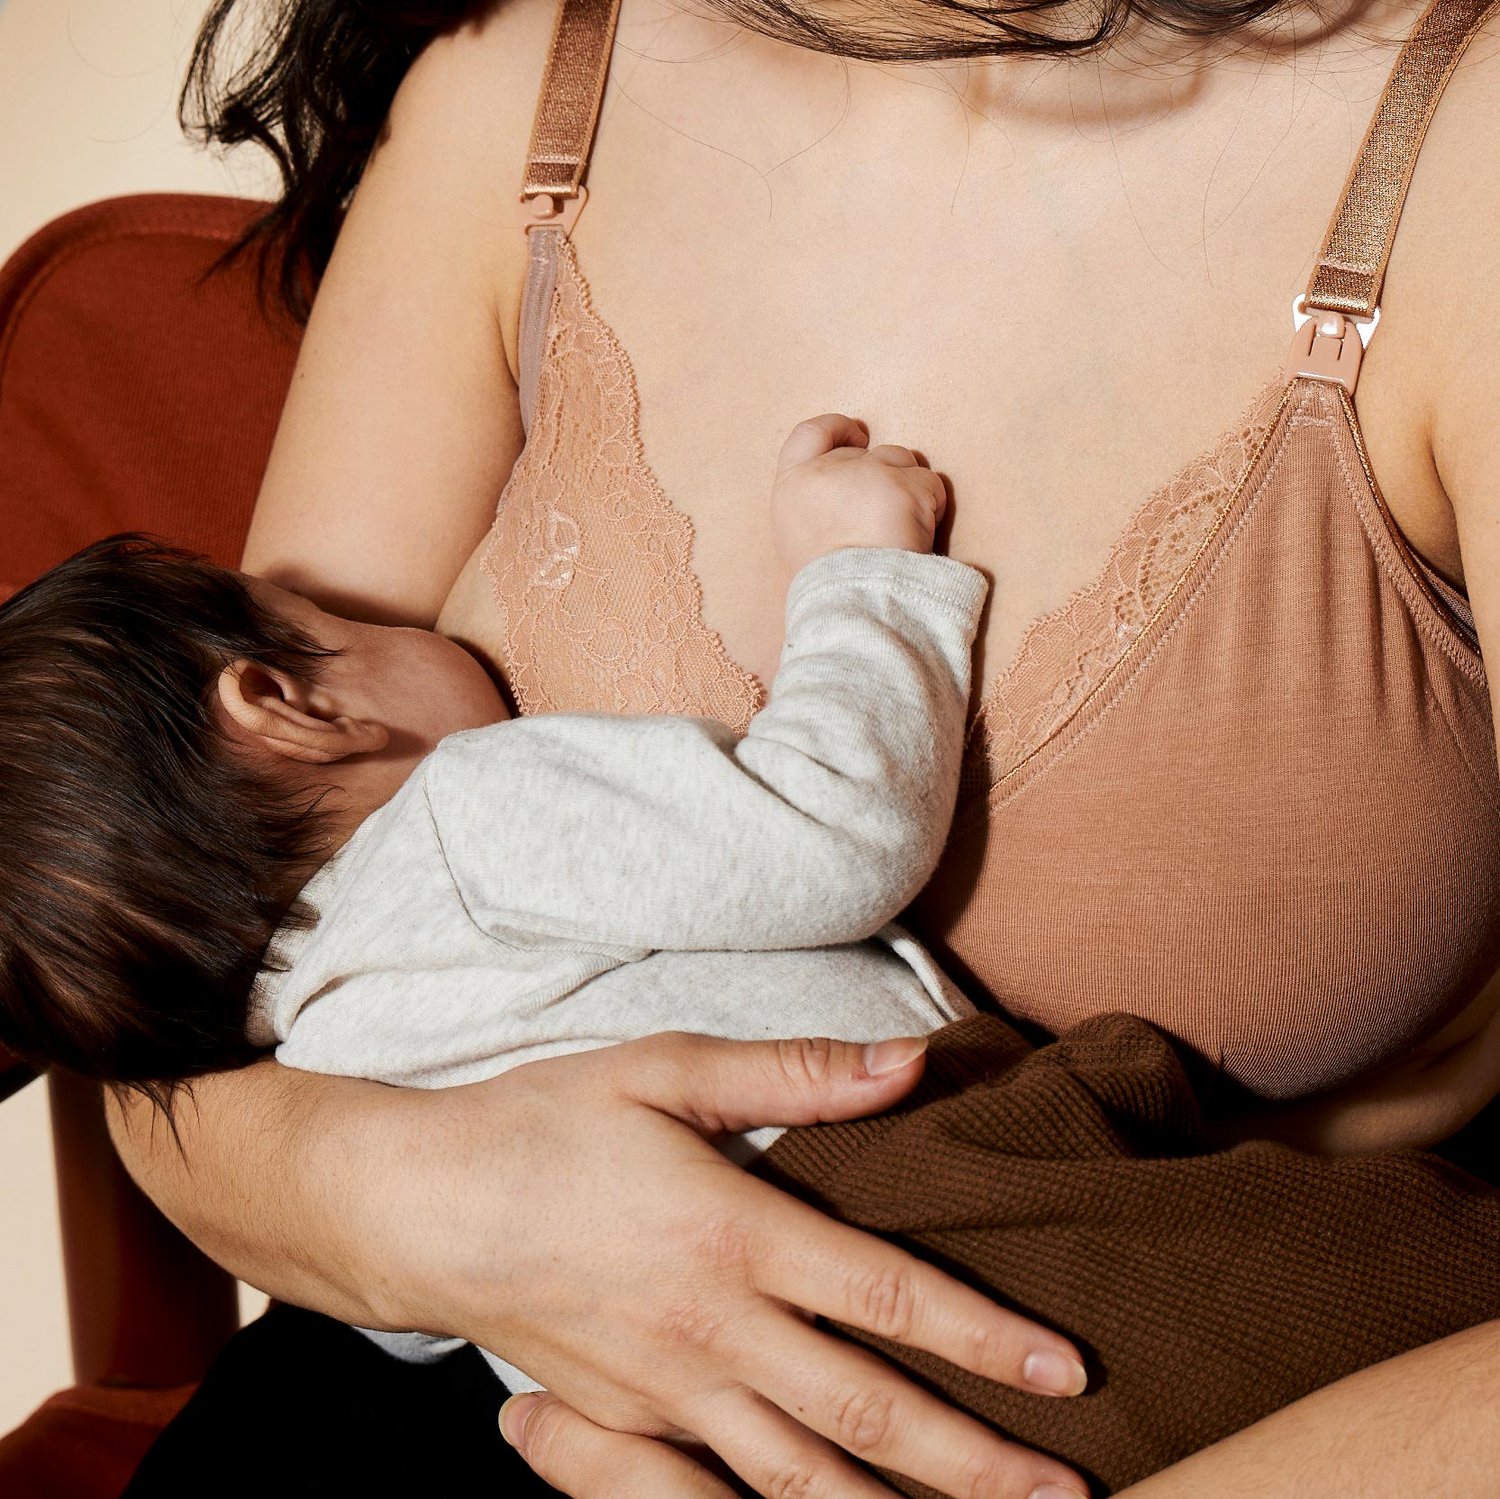 Fashion Nursing Bra Women Breastfeeding Bras Mothers Feeding